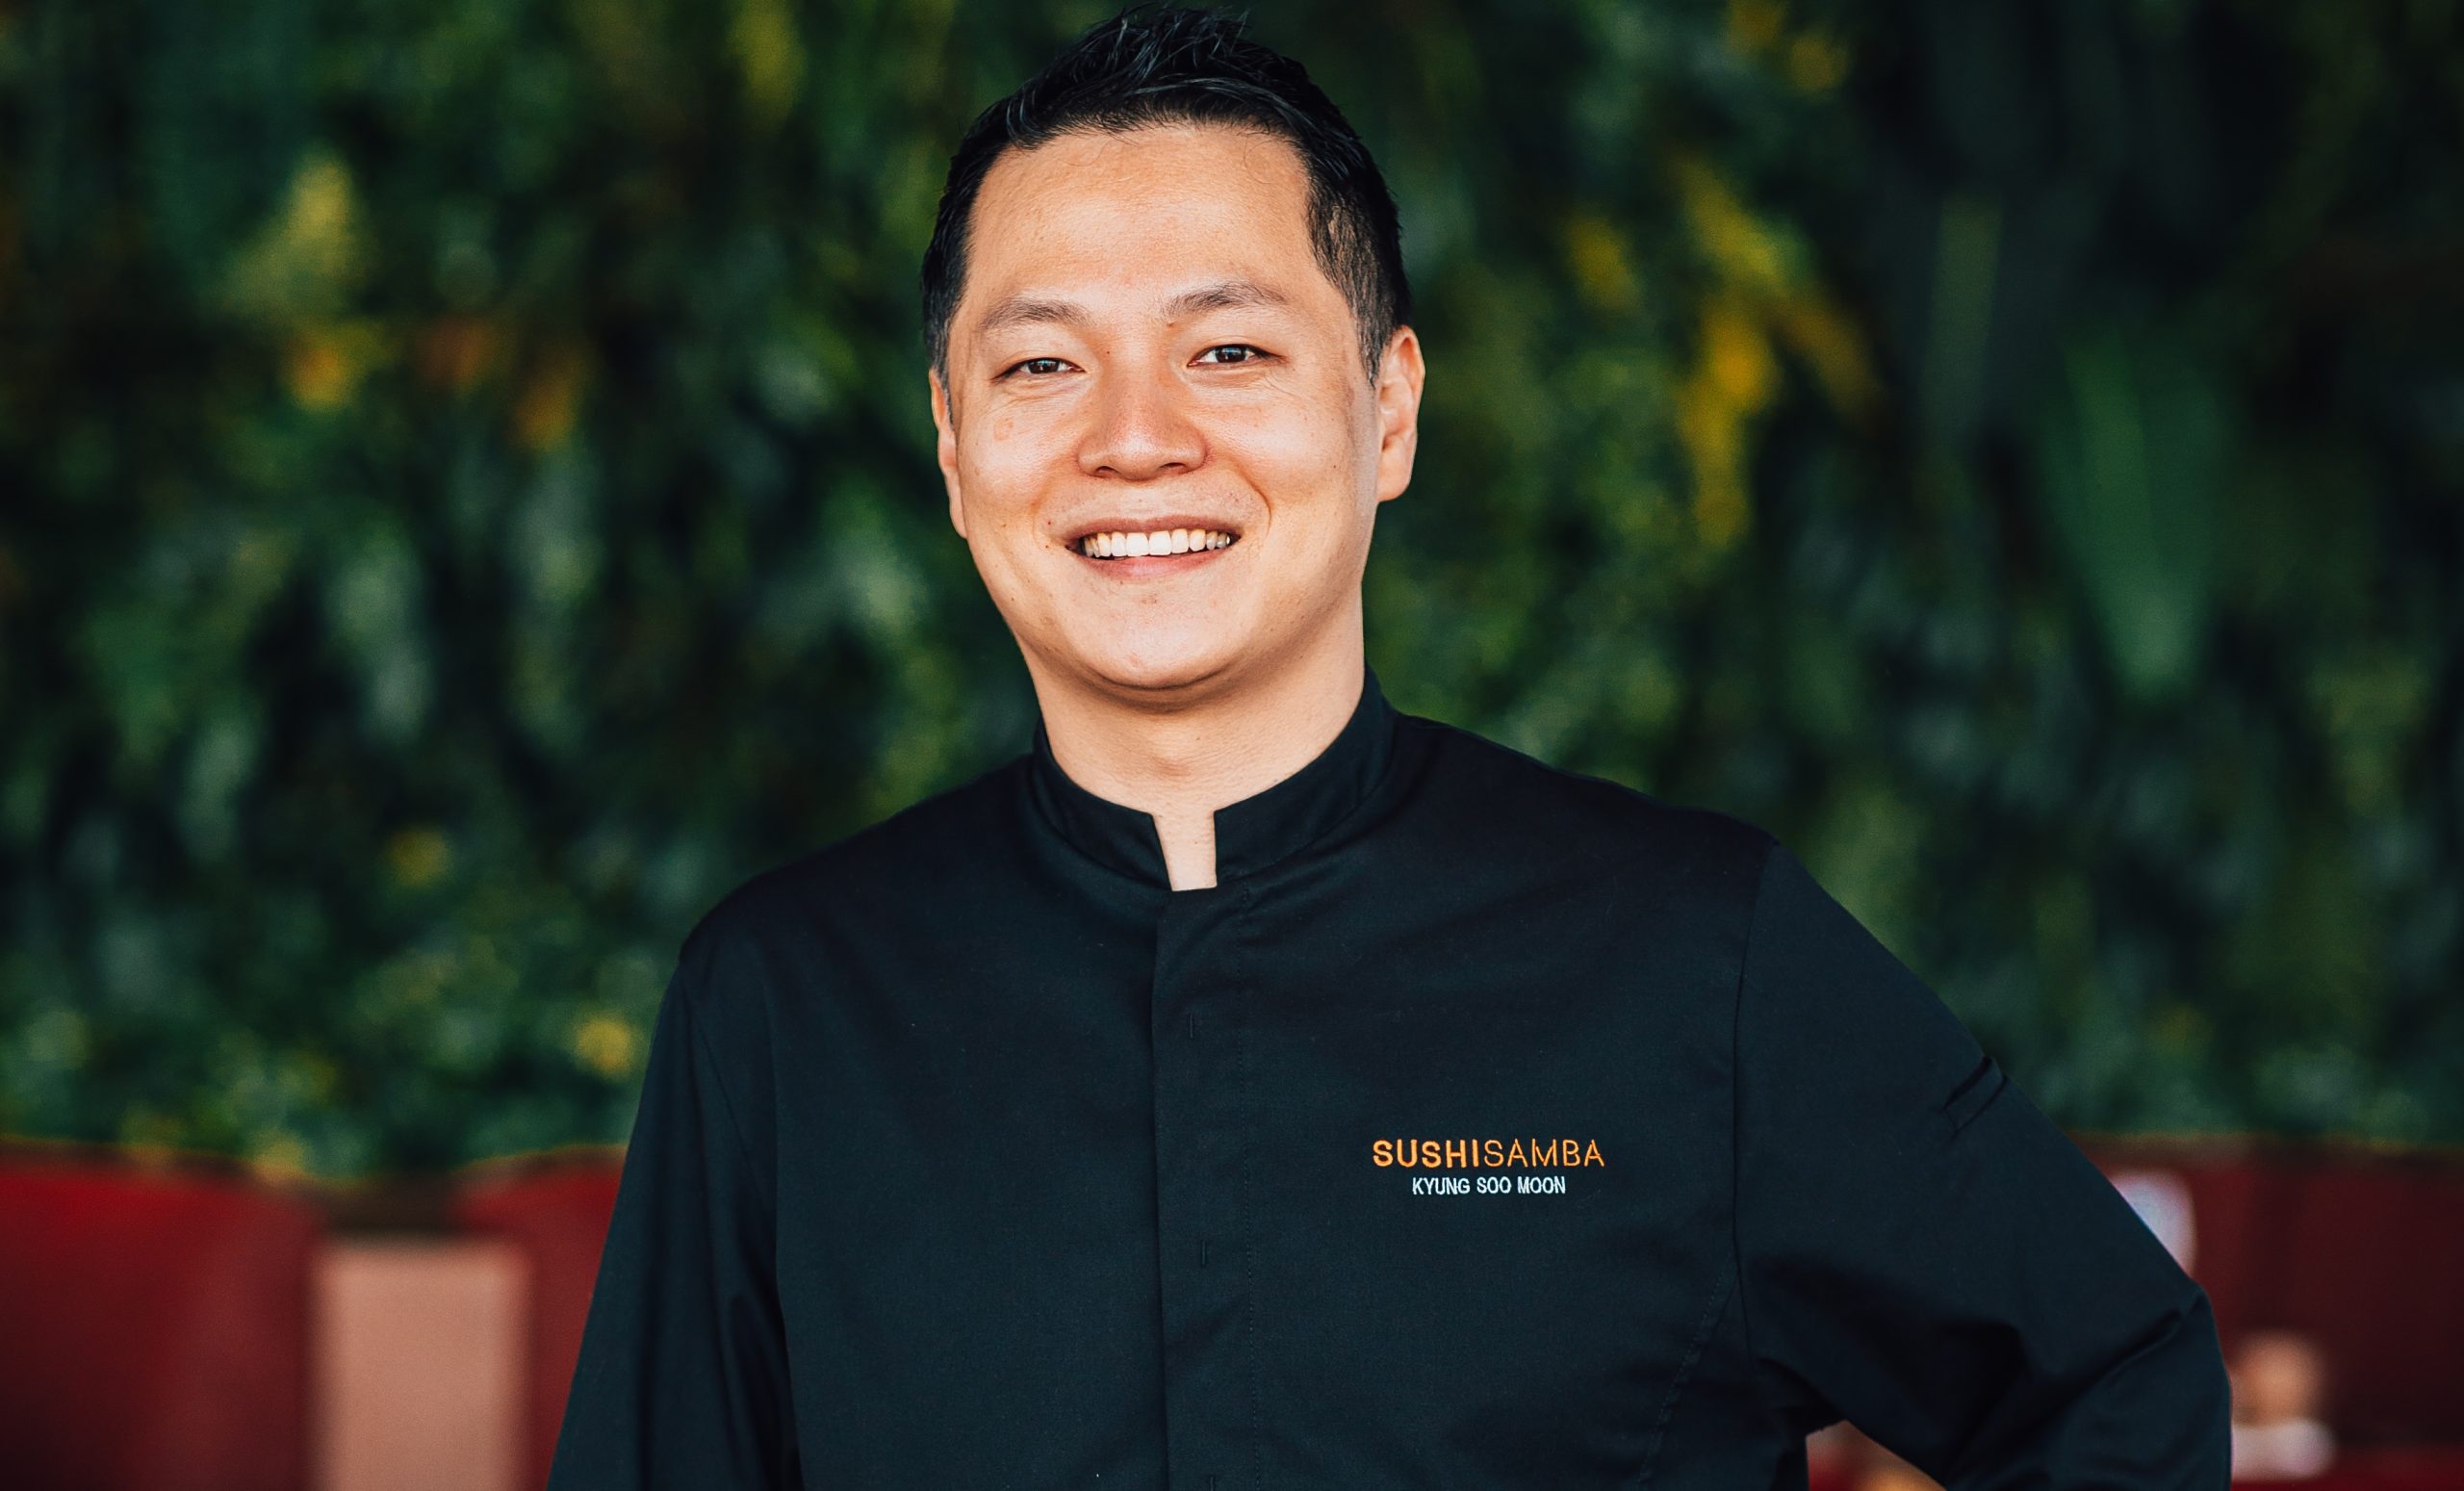 Kyung Soo Moon, culinary director of SUSHISAMBA Dubai